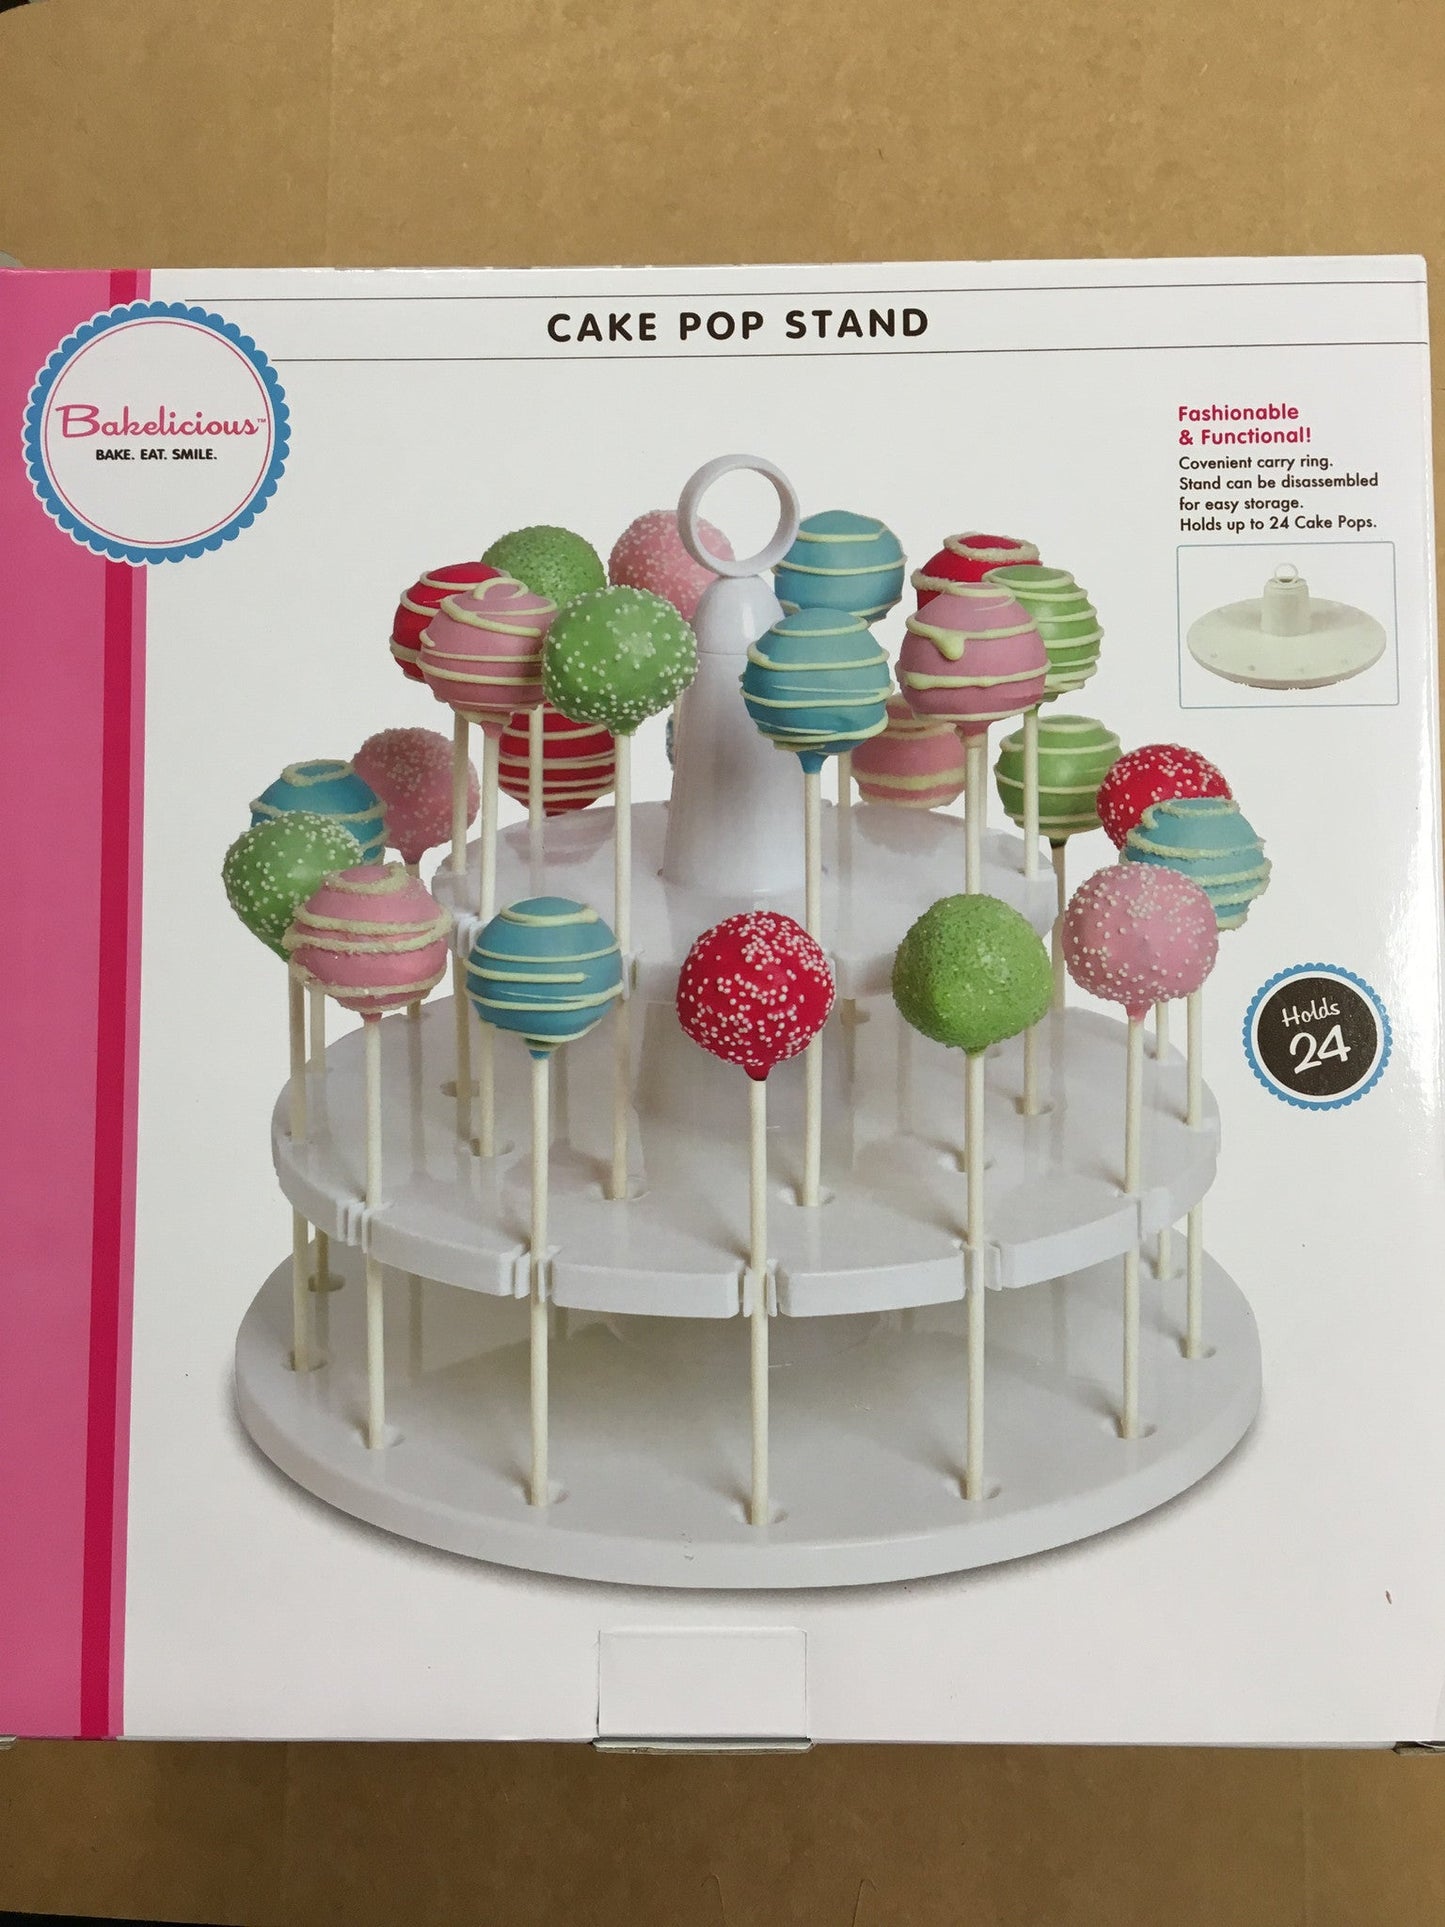 Bakelicious Cake Pop Stand